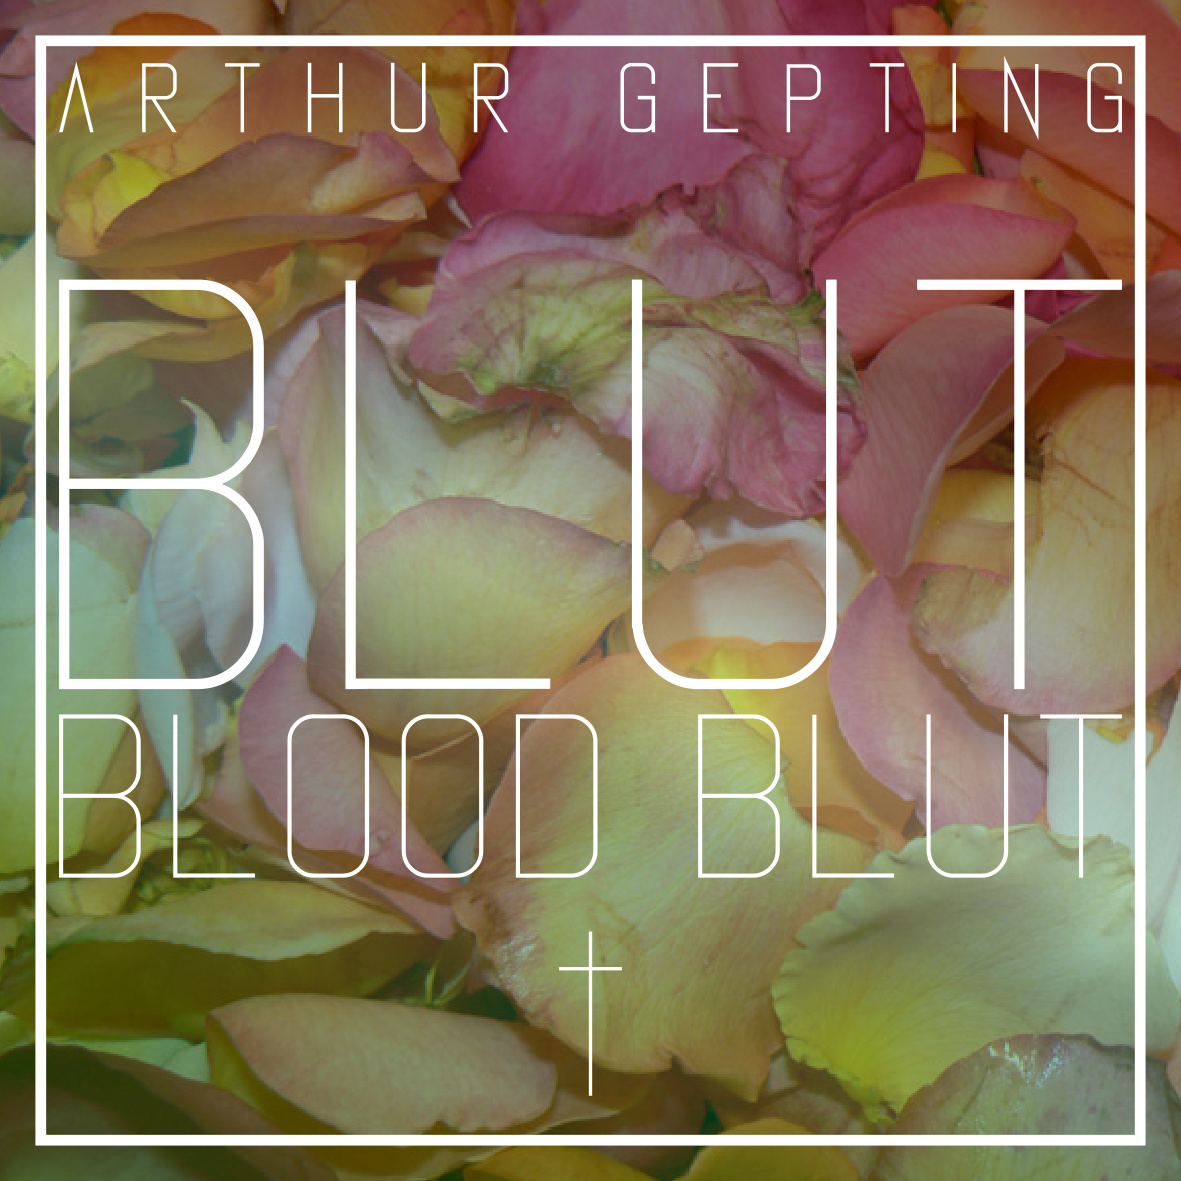 Arthur Gepting-Blut Blood Blut.jpg